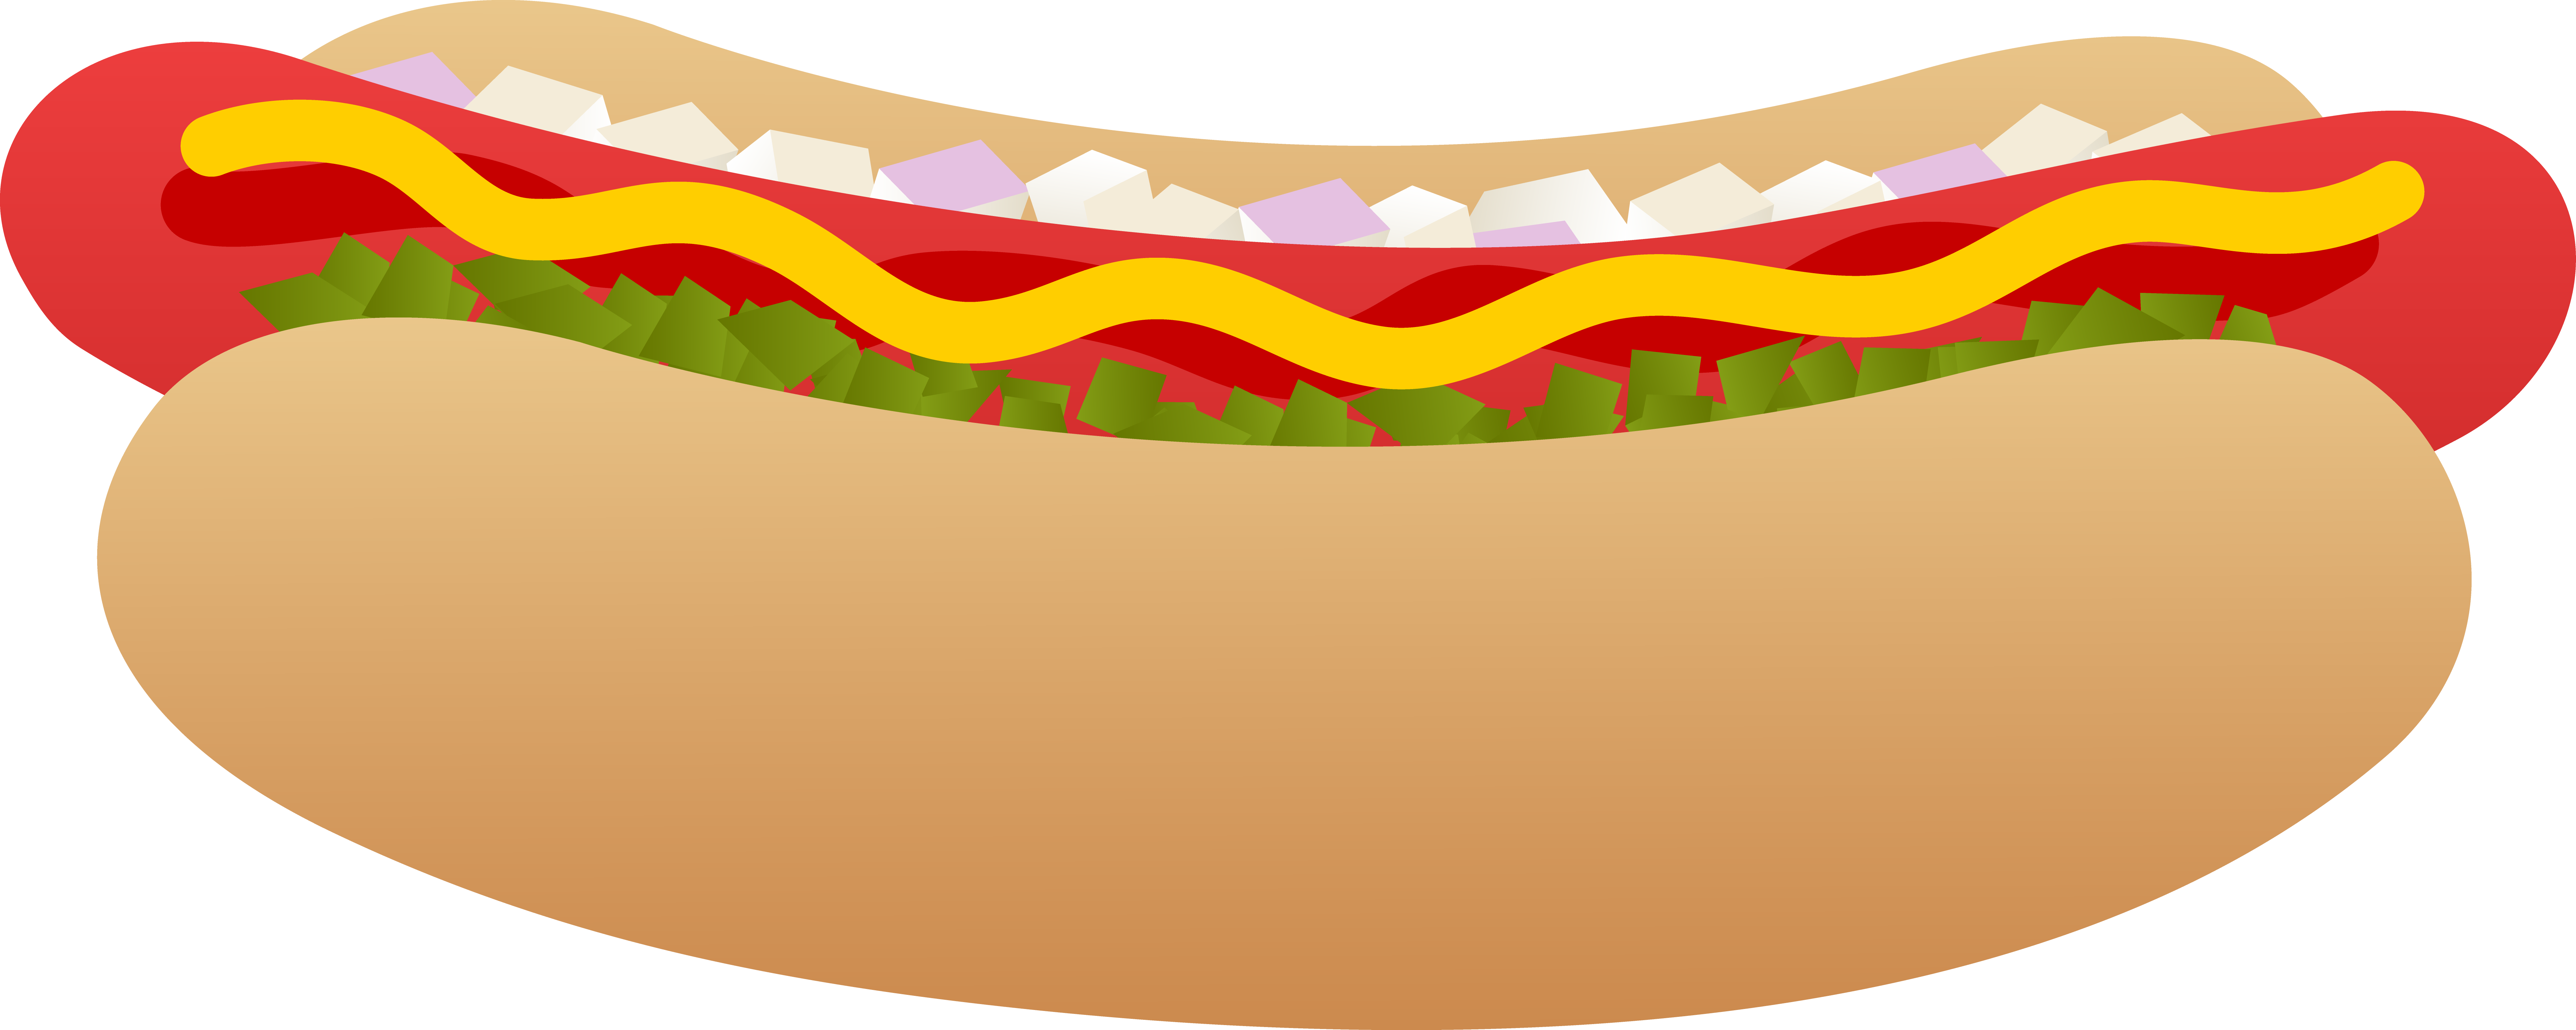 Hot dog png immagine